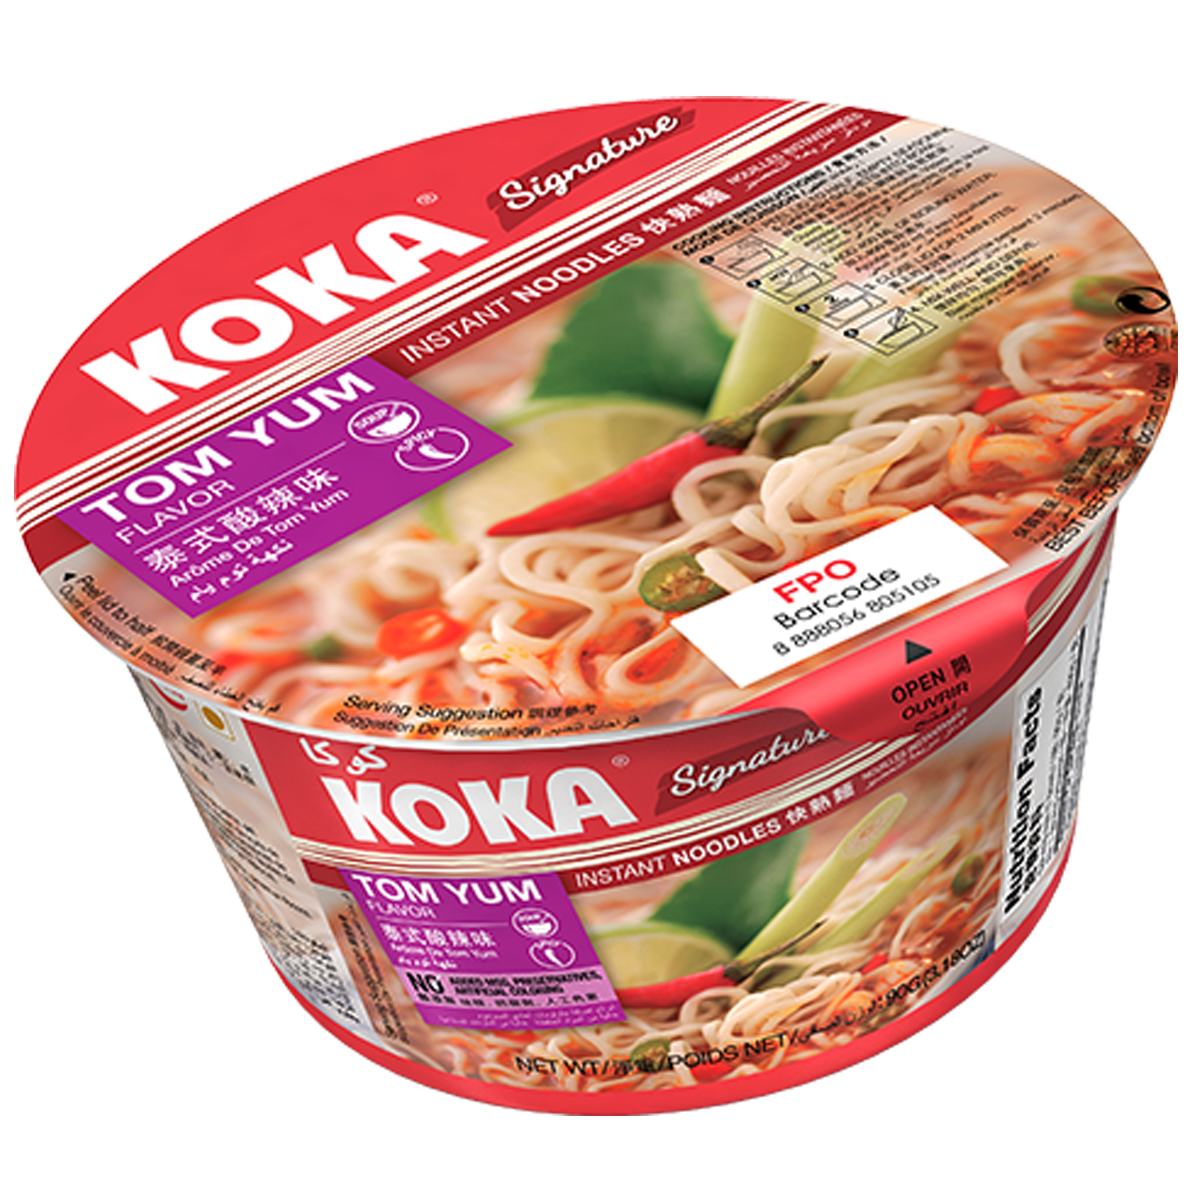 Koka Signature Bowls Tomyum Noodle Soup 90g